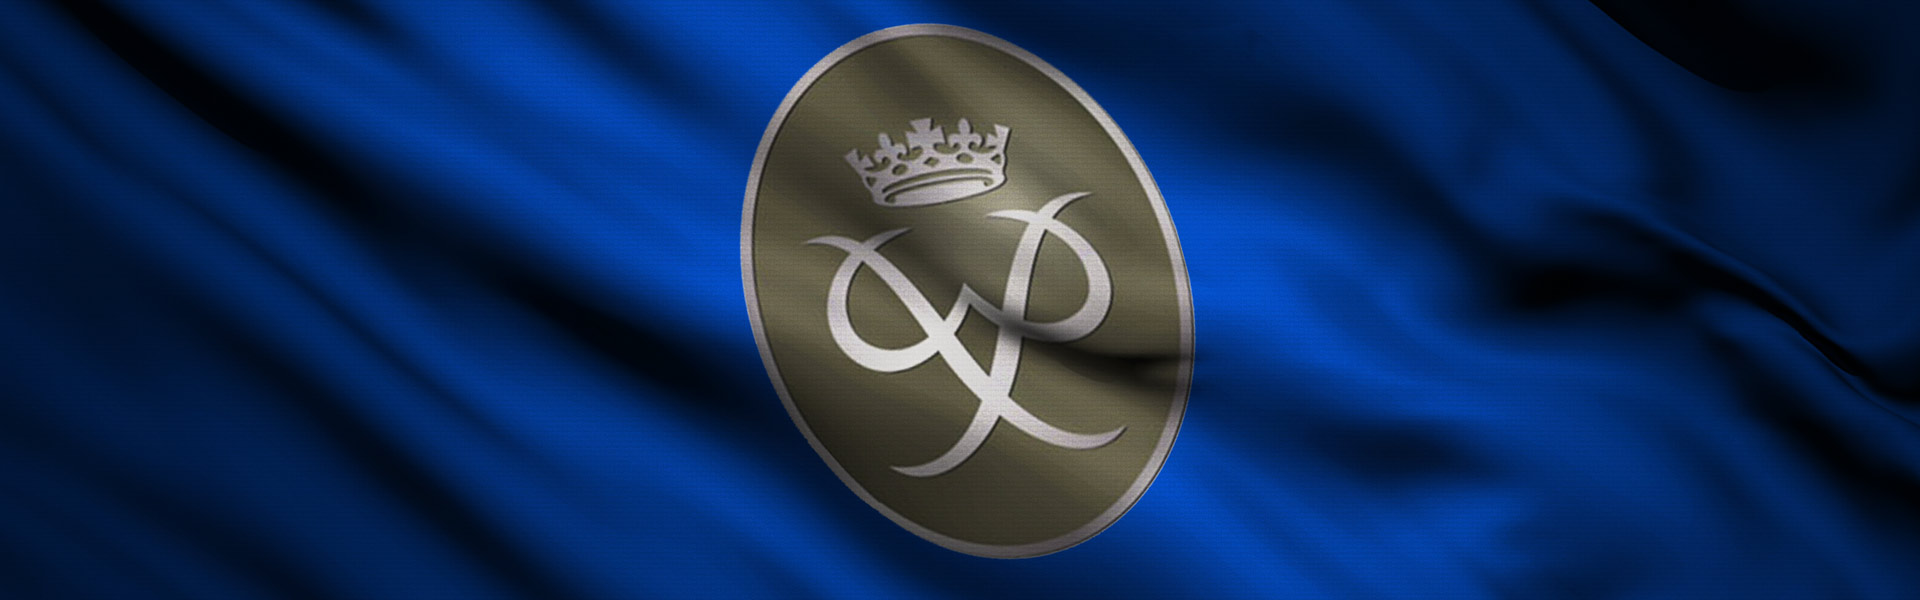 duke of edinburgh silver award logo printed on blue farbric